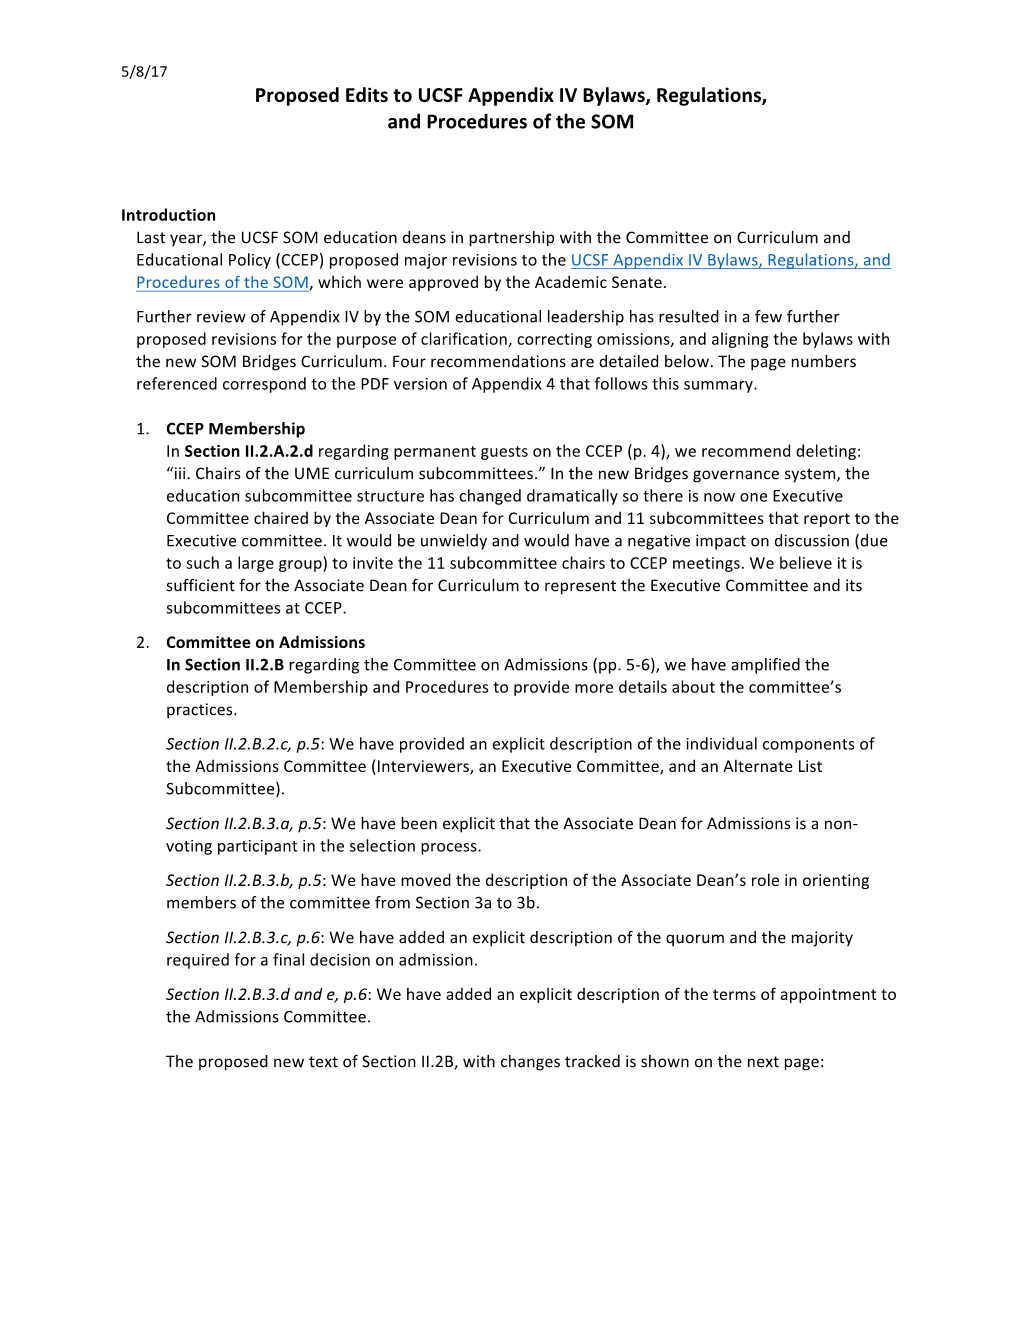 Appendix IV School of Medicine Bylaws and Regulations | UCS